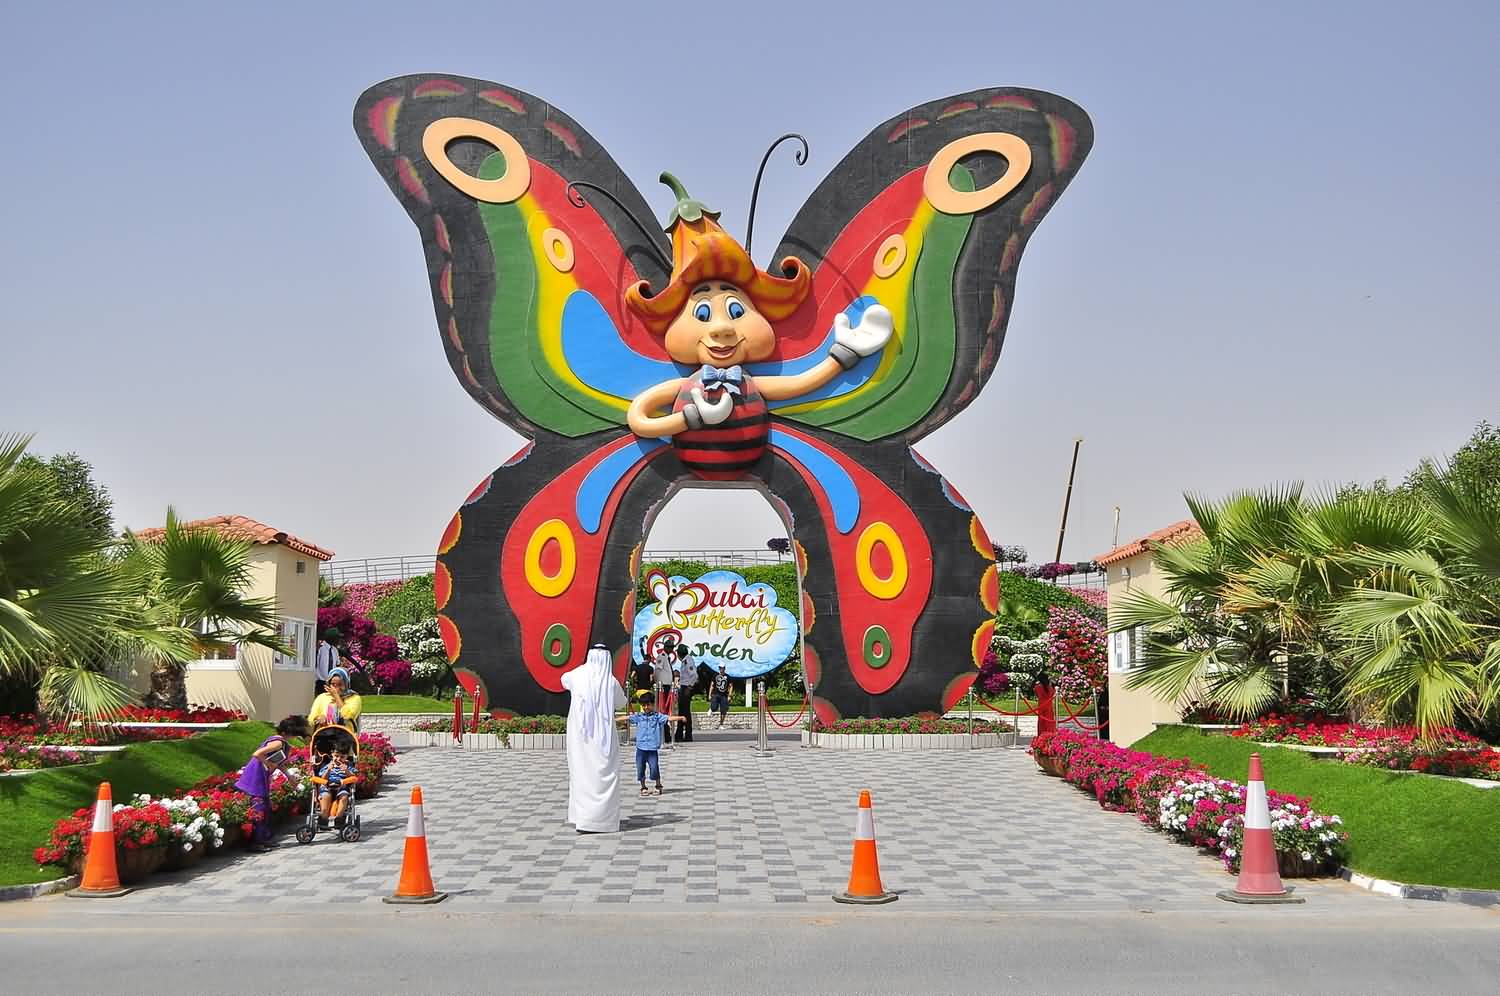 1581258341 746 A guide to the most beautiful Dubai theme parks - A guide to the most beautiful Dubai theme parks